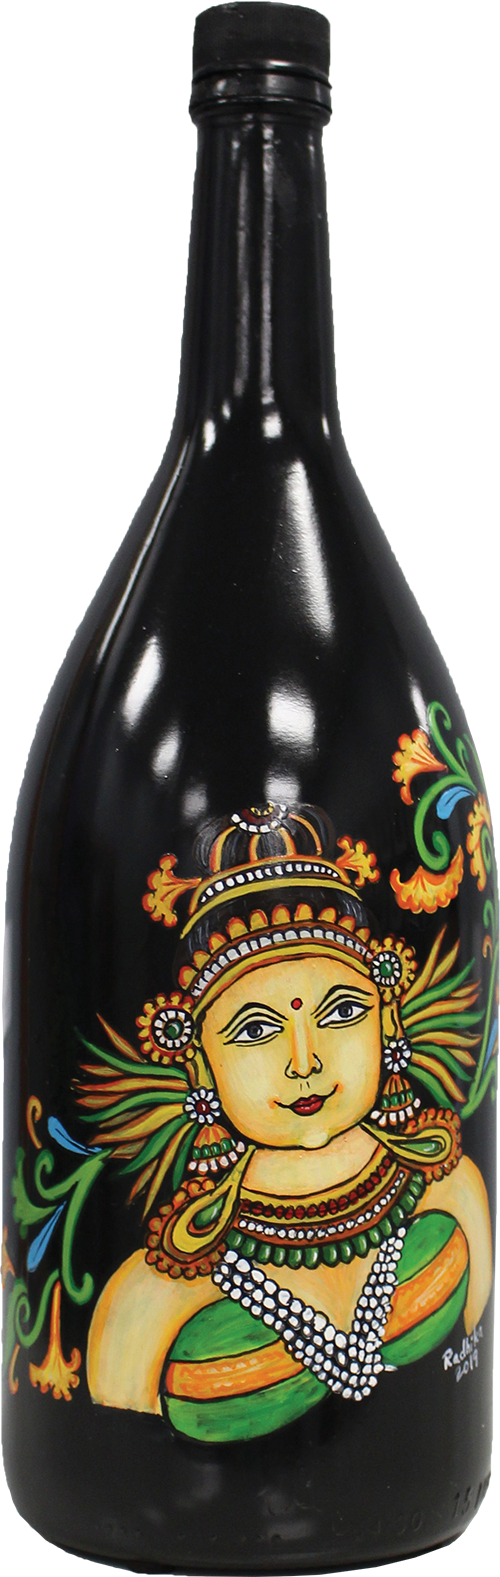 Radhika's artwork on a bottle